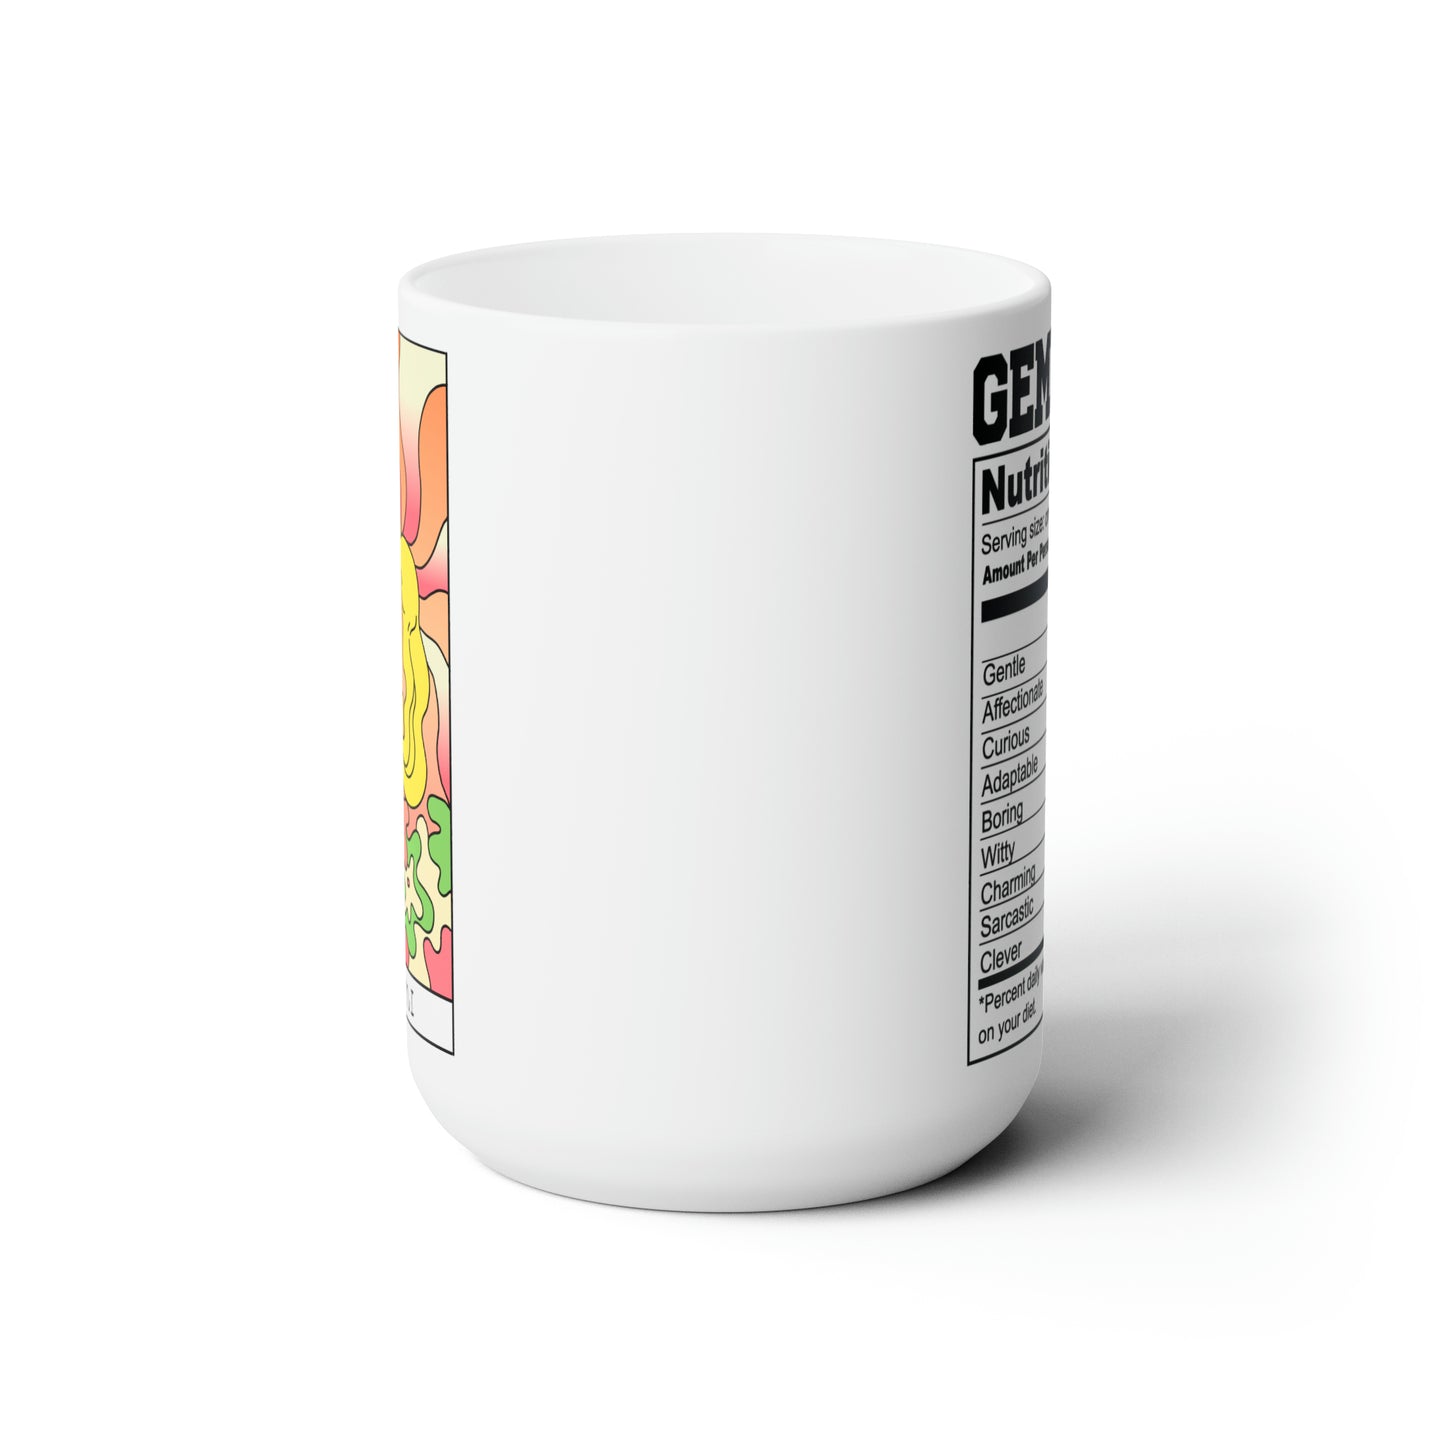 Gemini Tarot Card Coffee Mug - Double Sided White Ceramic 15oz - by TheGlassyLass.com